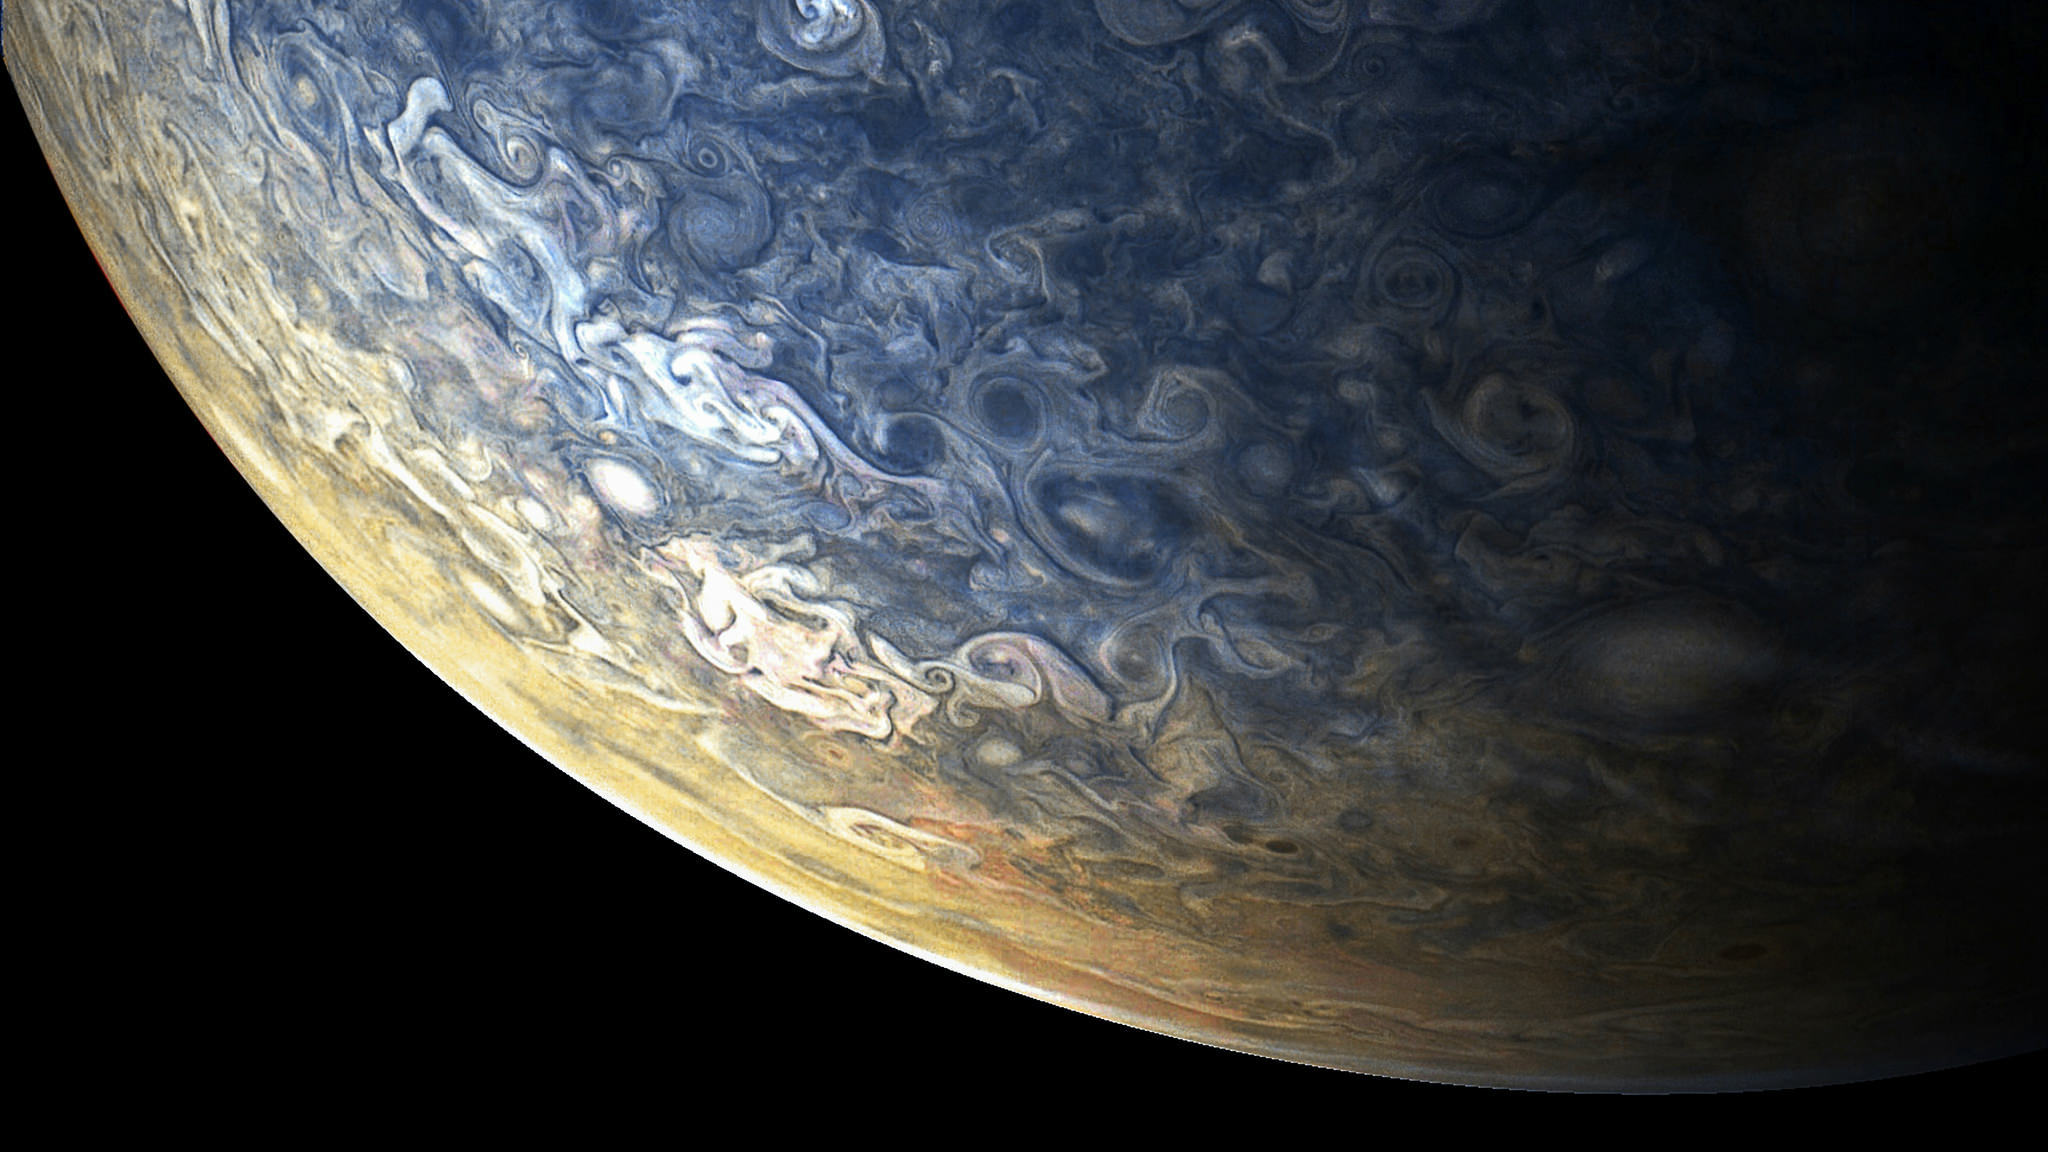 NASA's $1 Billion Juno Probe Has Been Sending Back Some Jaw-Dropping Photos of Jupiter